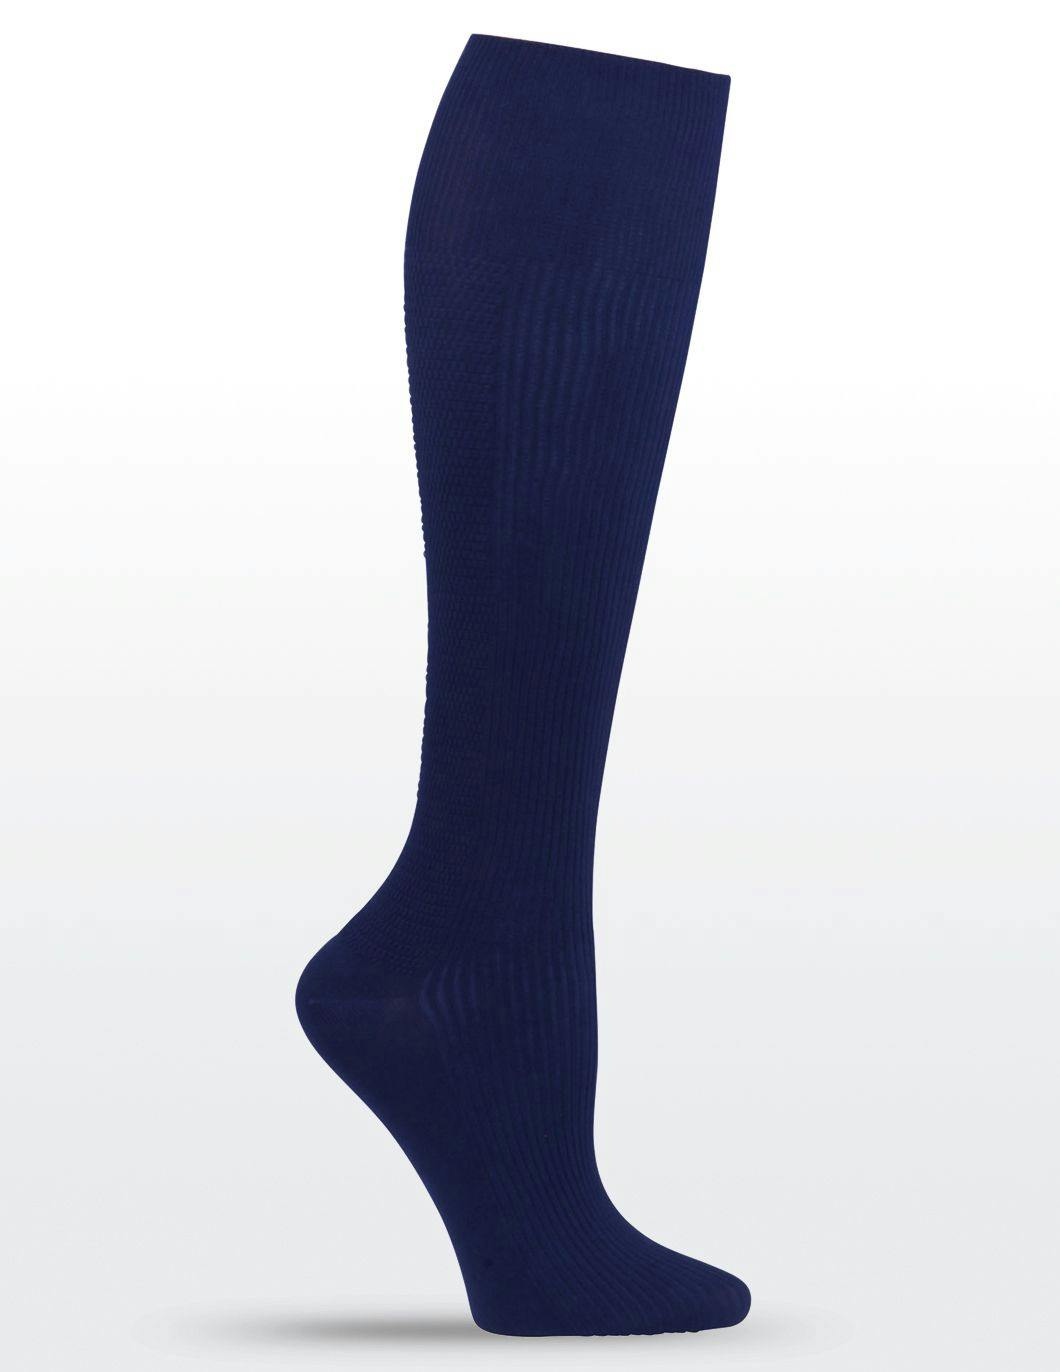 mens-compression-socks-navy